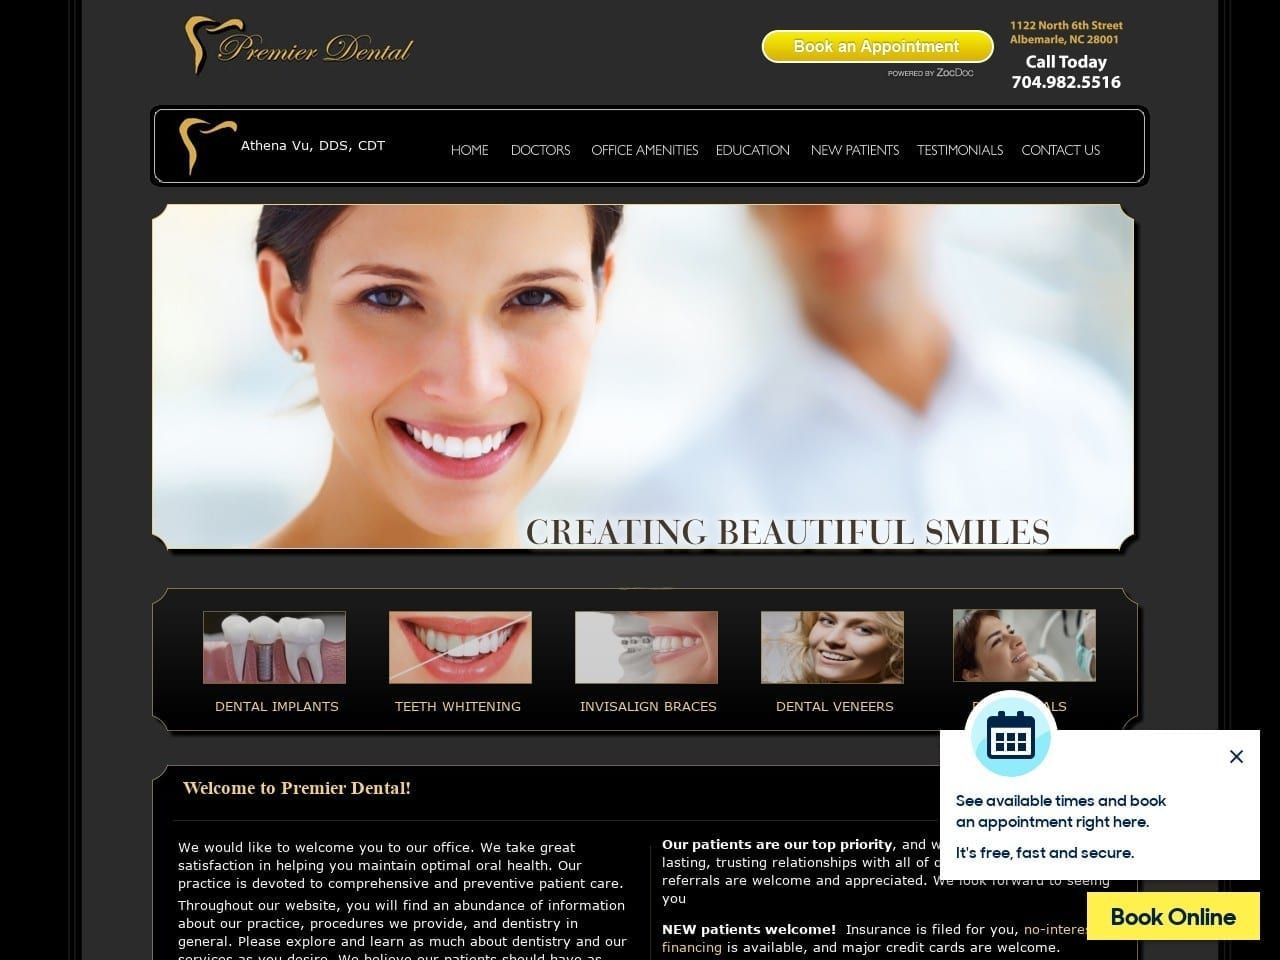 Premier Dental Website Screenshot from vudental.com